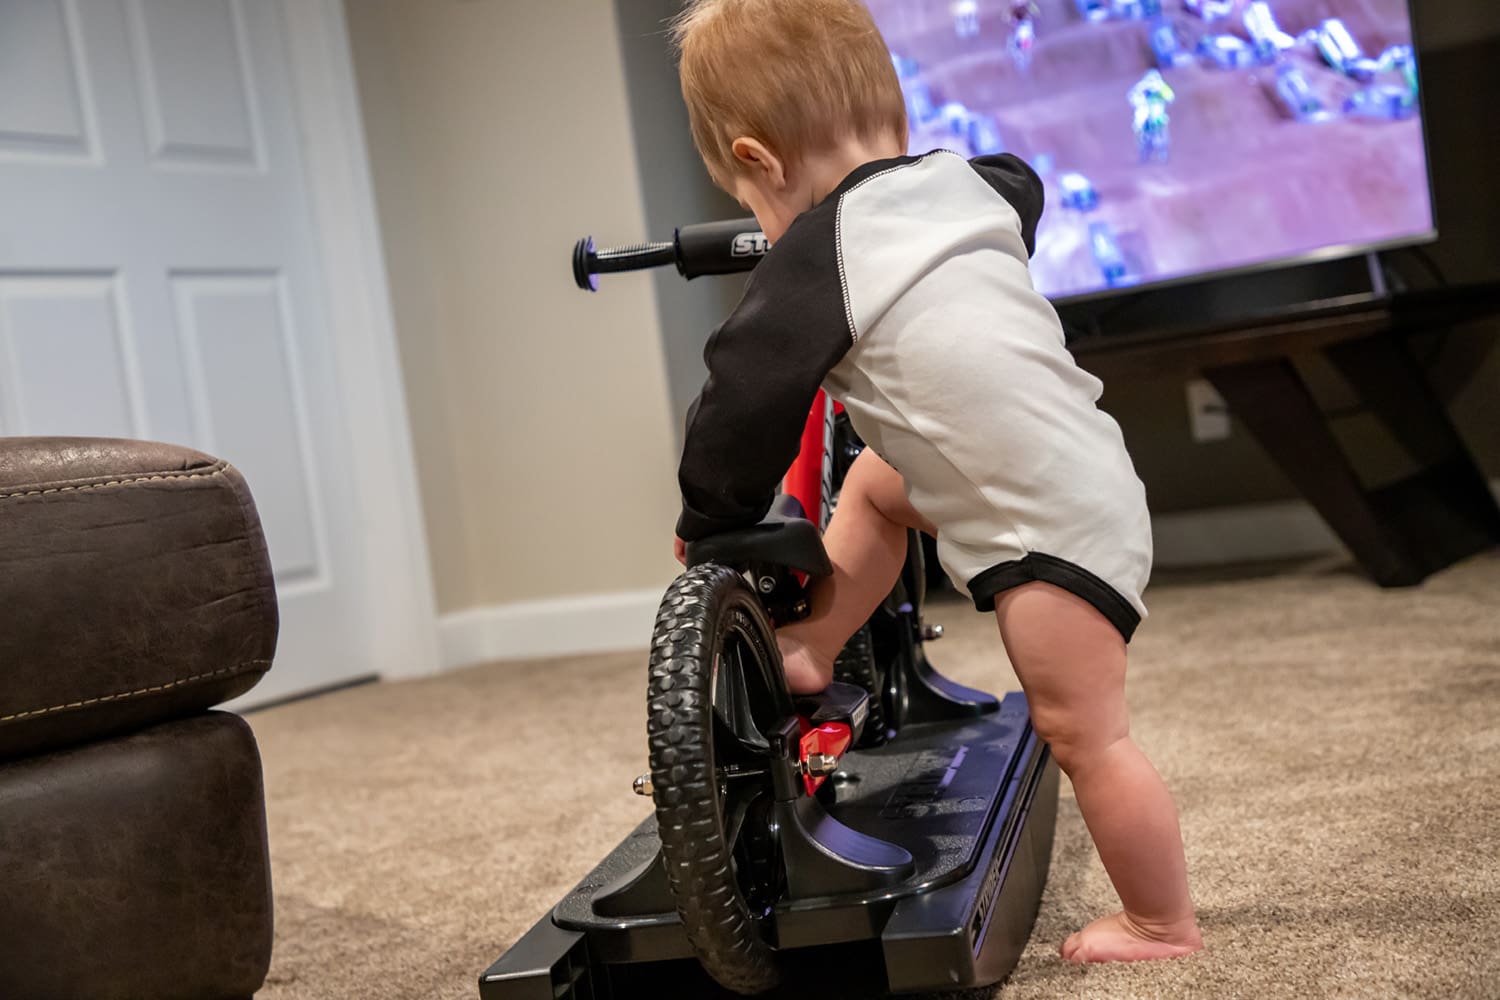 A toddler steps onto a red Strider Sport Rocking Bike